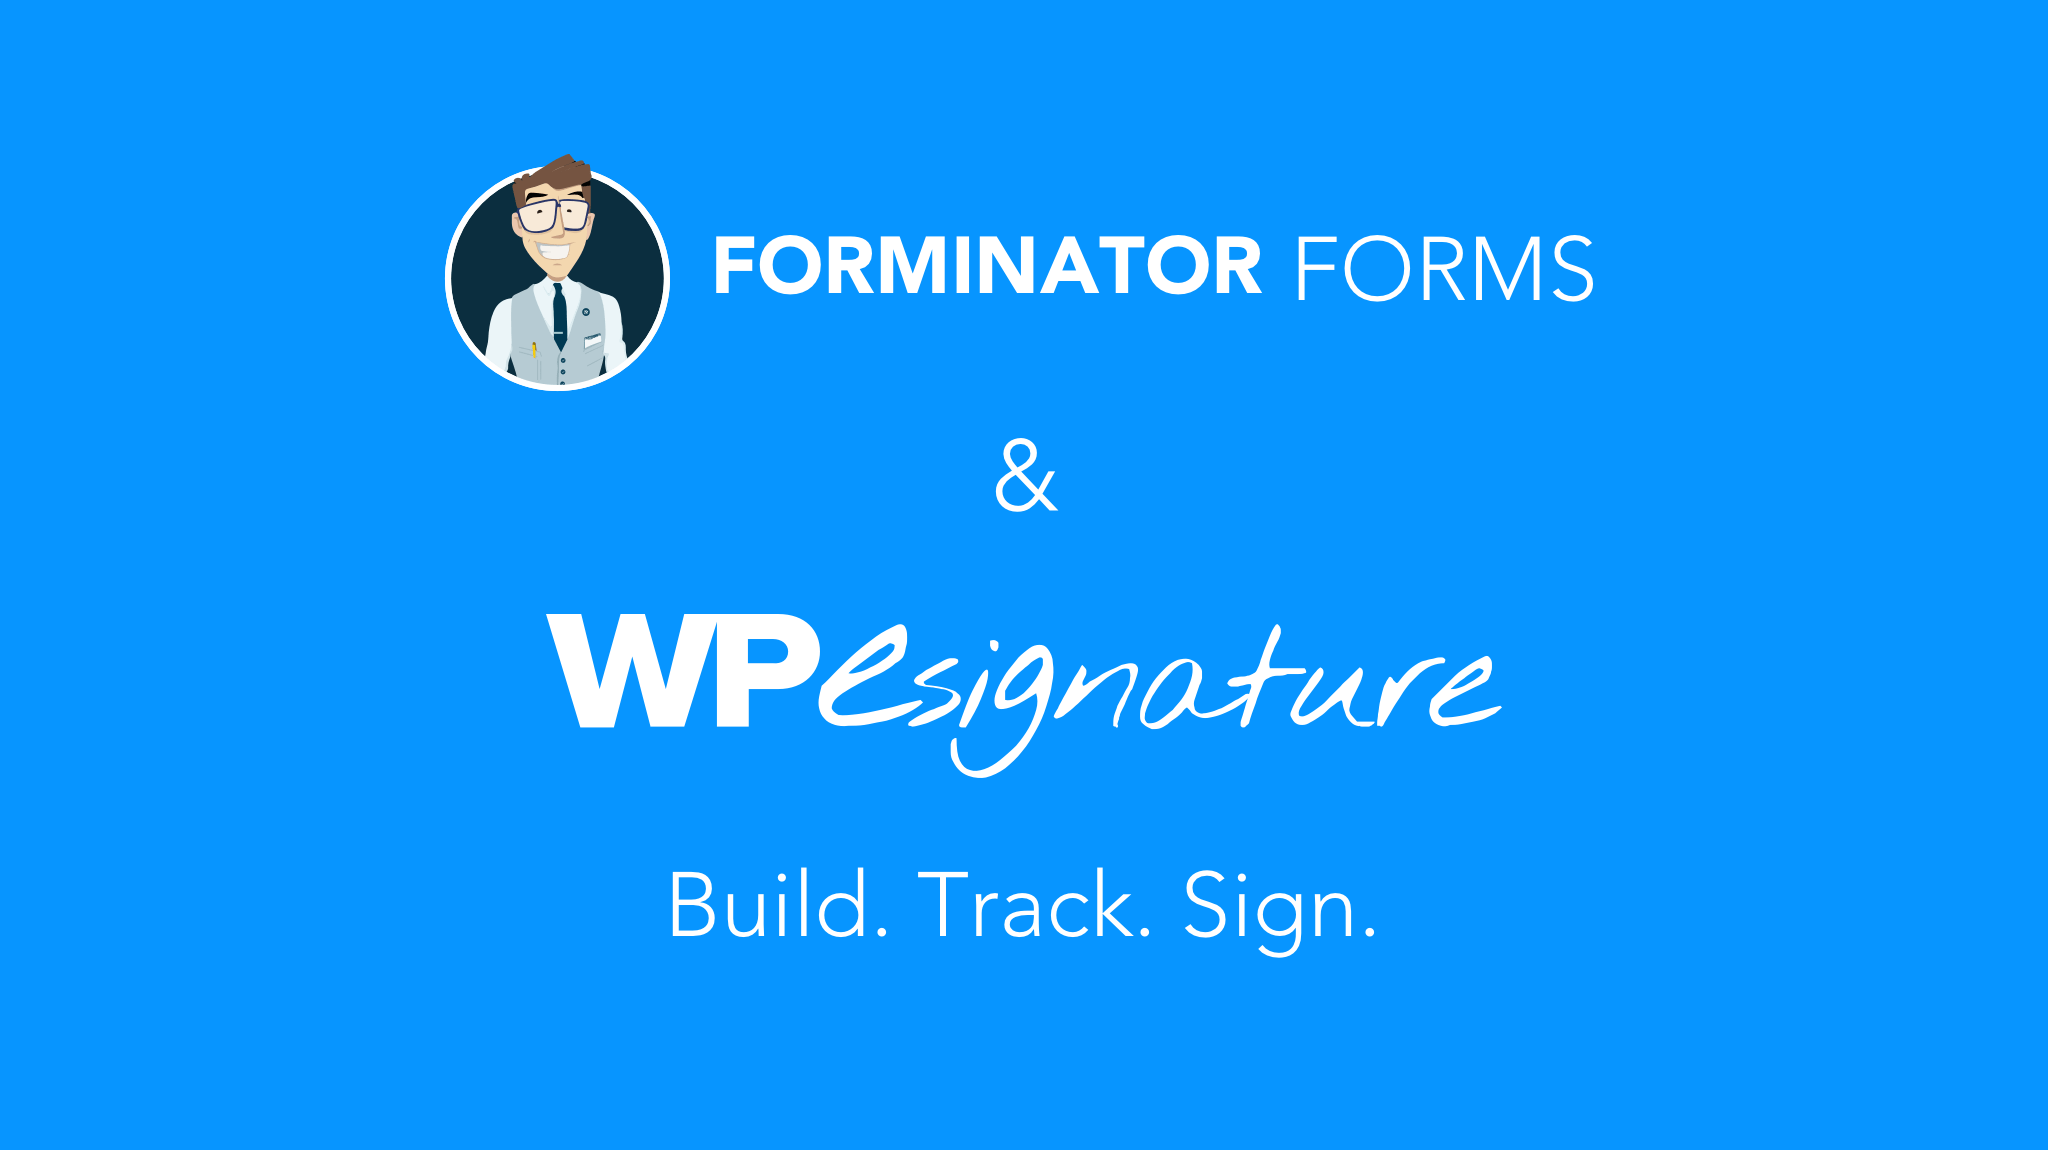 Forminator Forms Plugin Usage Documentation